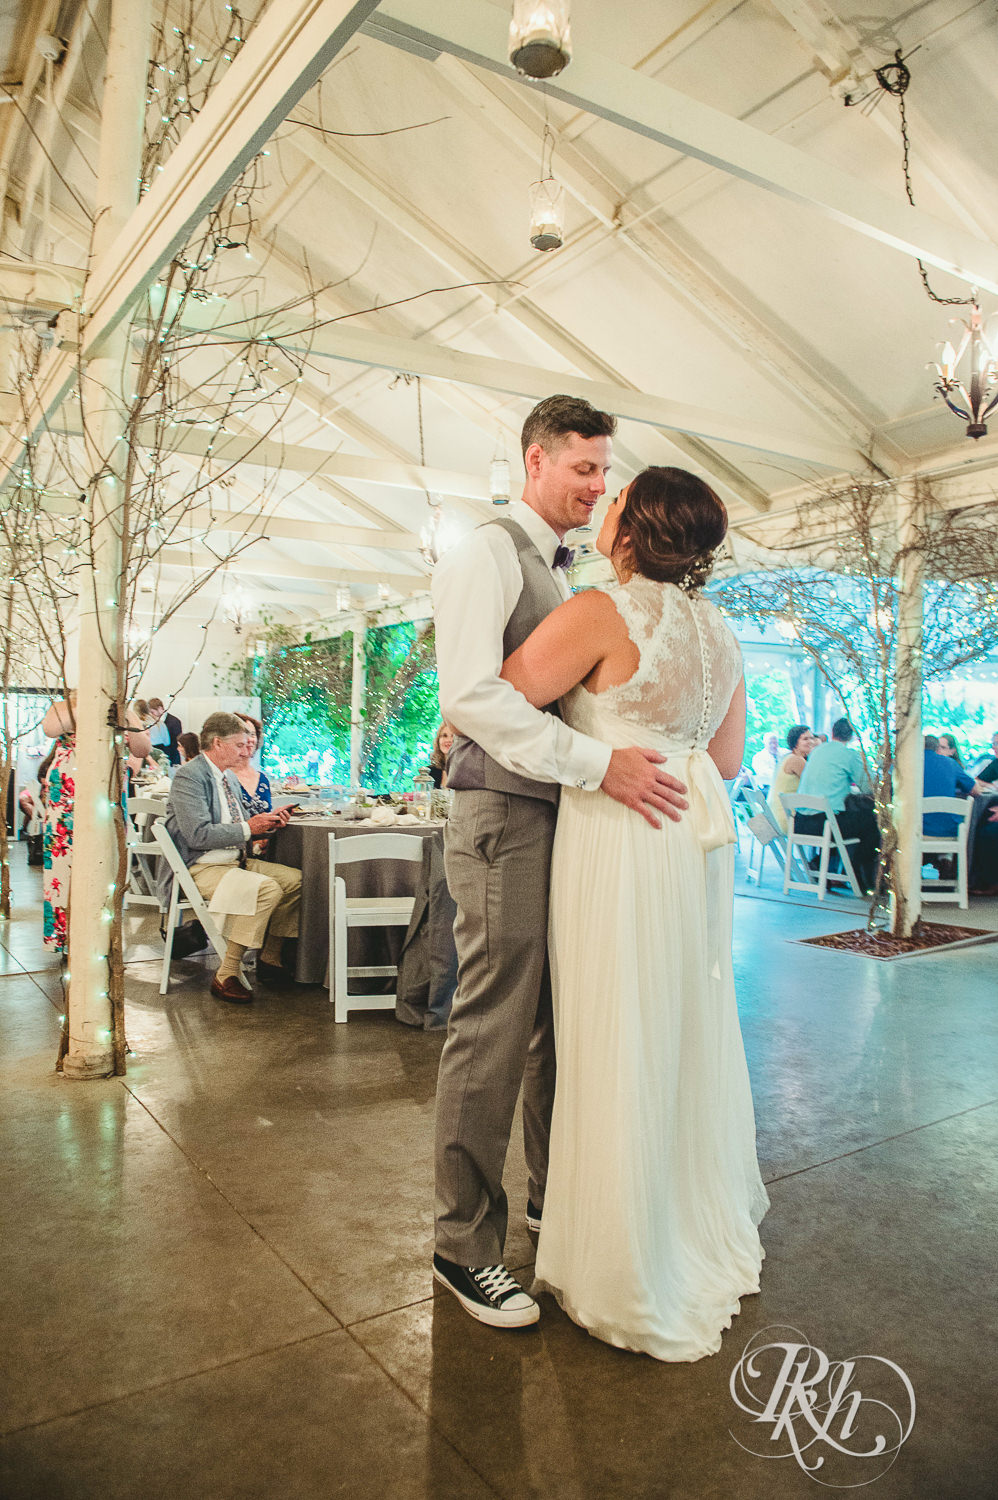 Bride and groom dance during wedding reception at Camrose Hill Flower Farm in Stillwater, Minnesota.